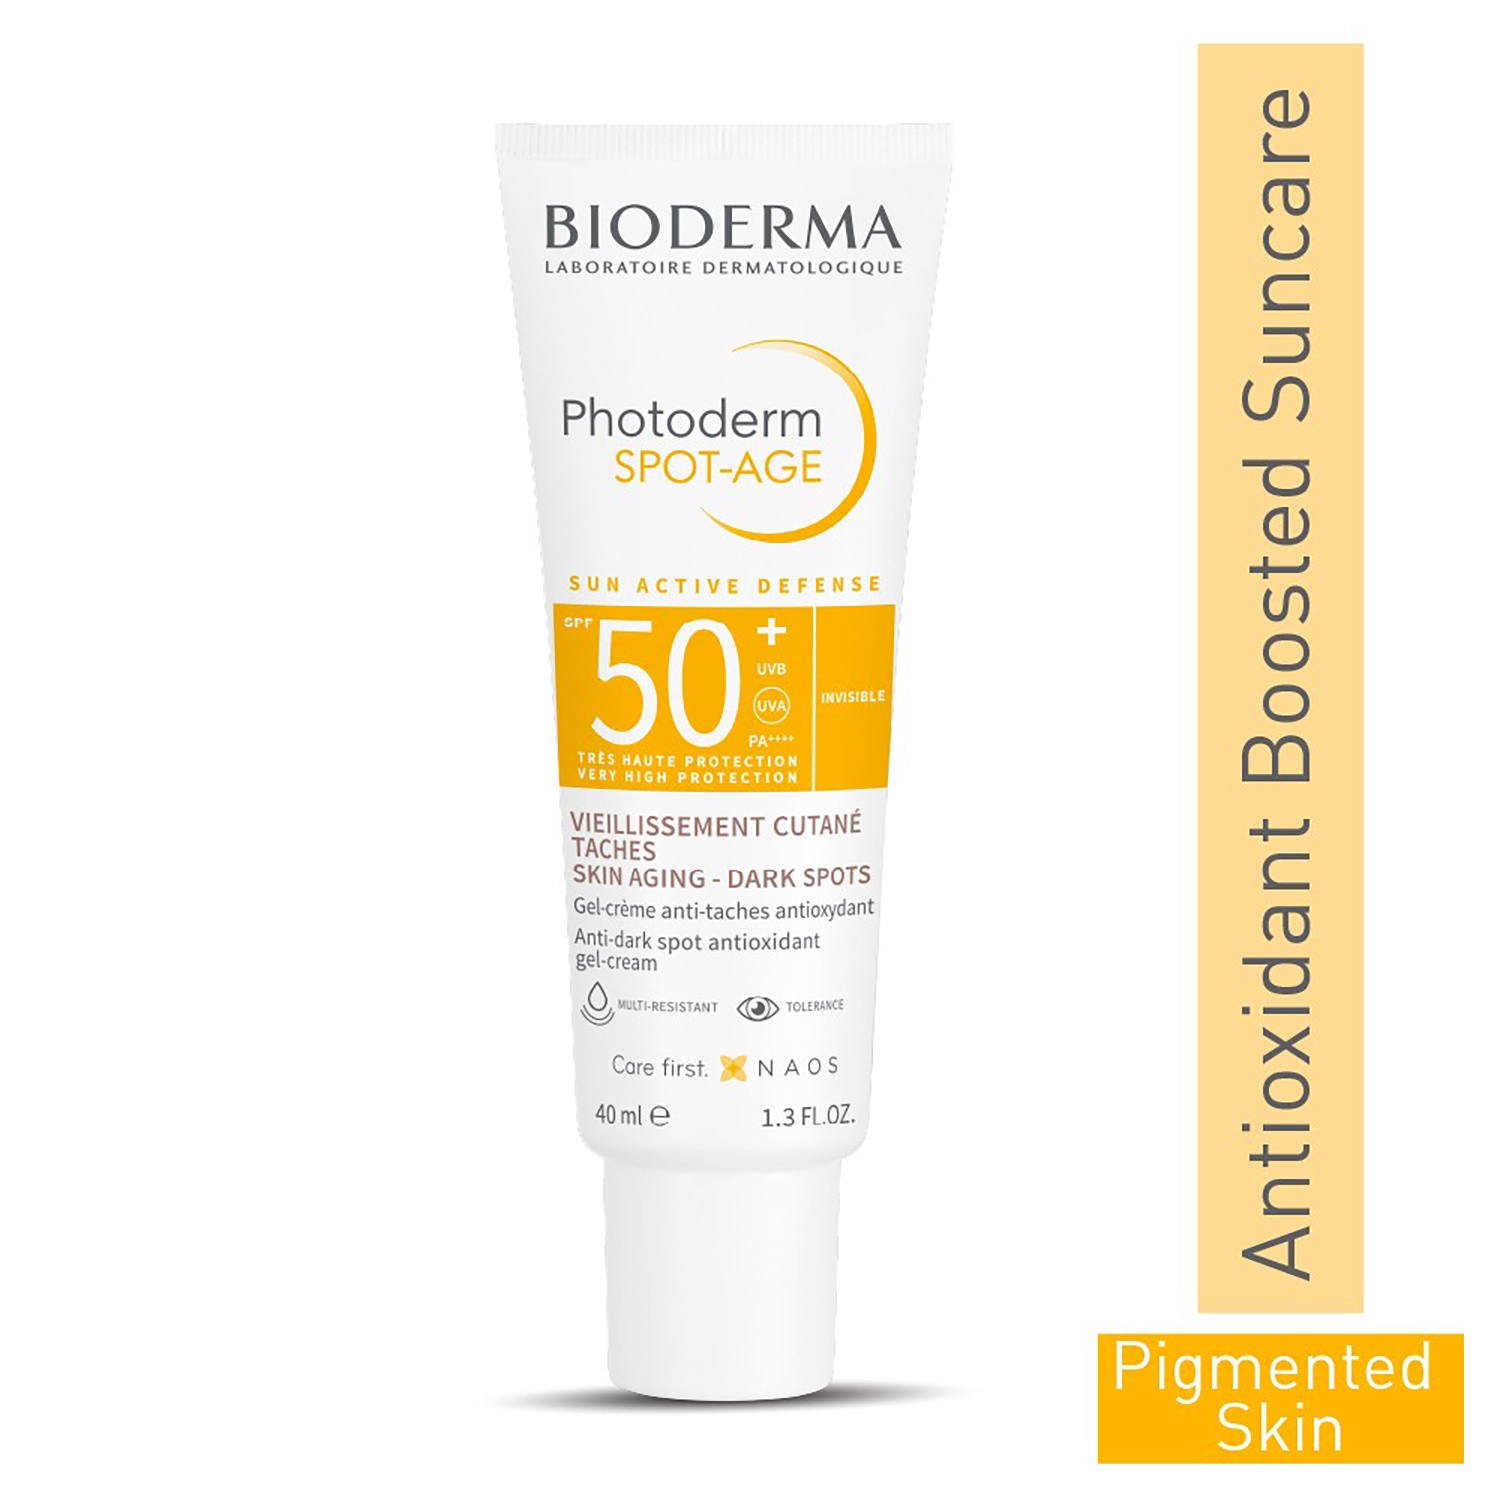 Bioderma | Bioderma Photoderm Spot Age Gel Sunscreen SPF 50+ (40ml)